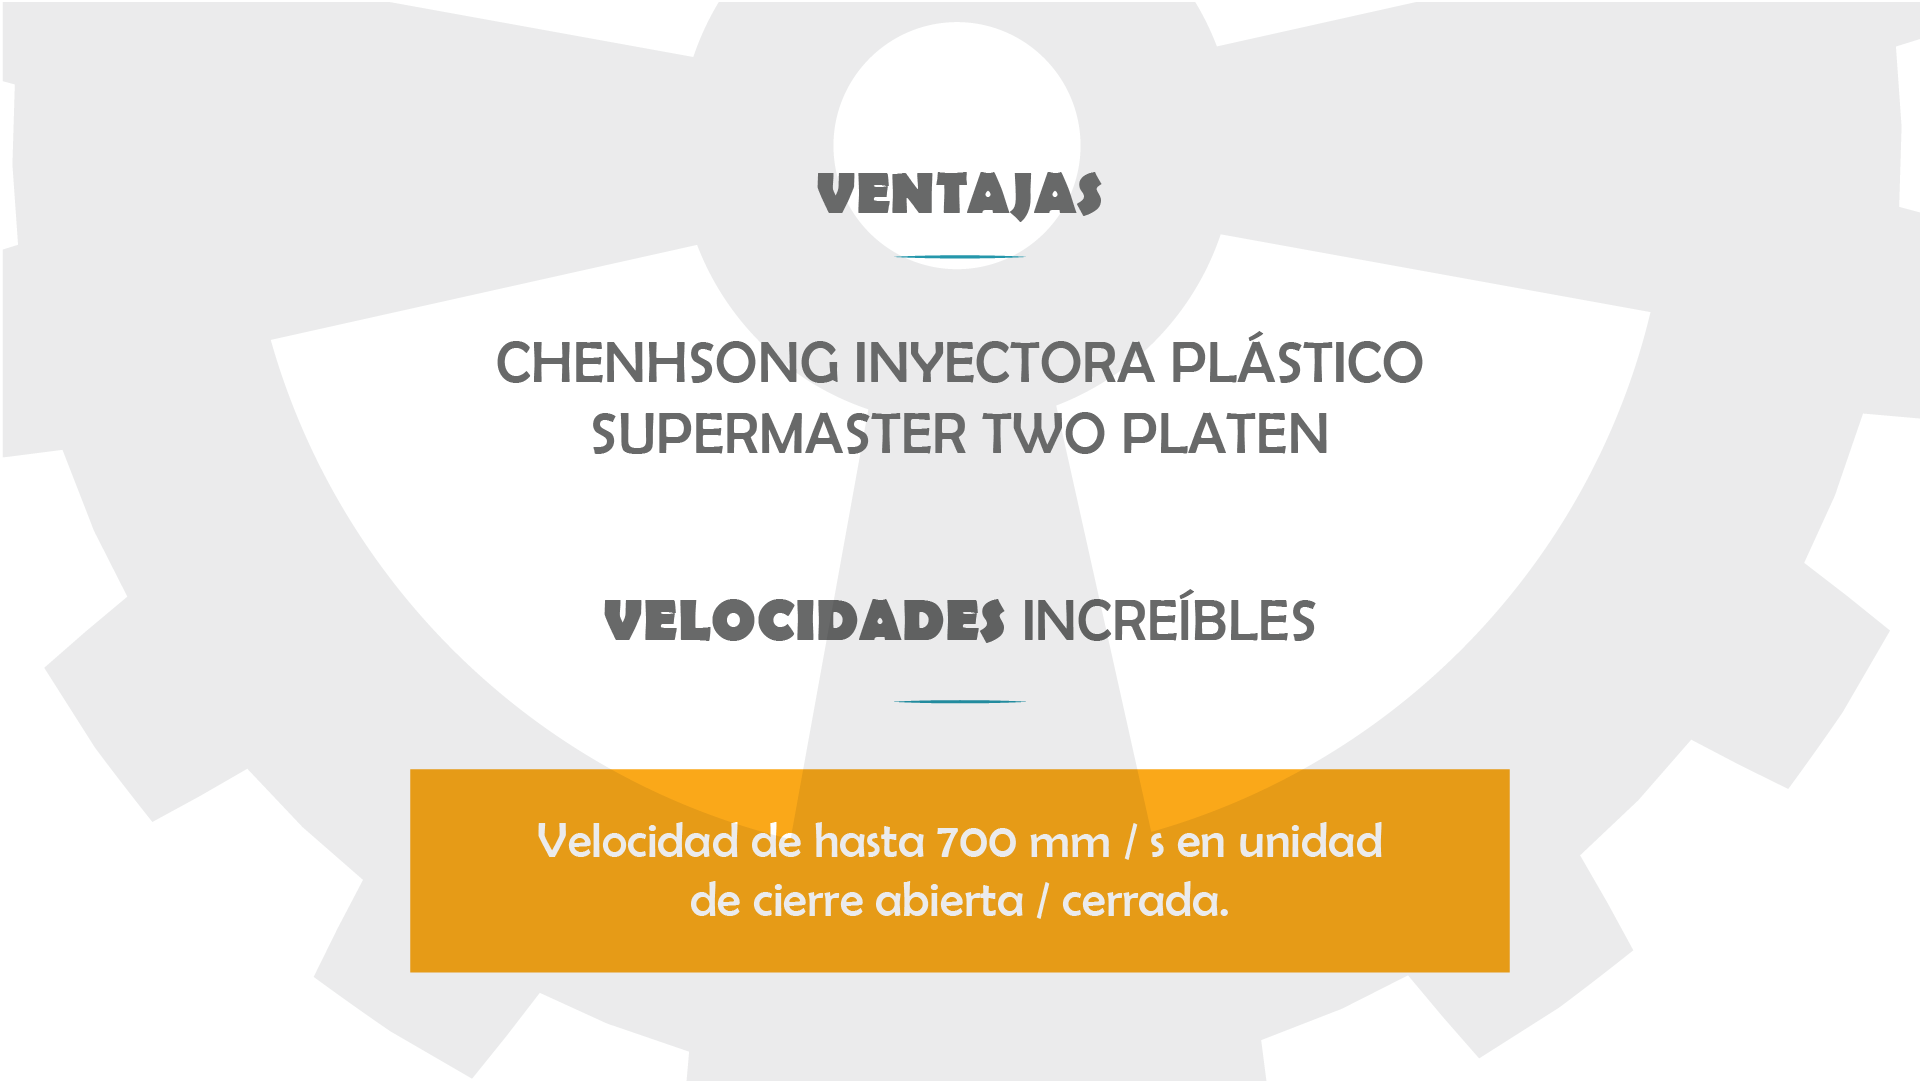 Chenhsong Inyectora Plástico SUPERMASTER Two Platen